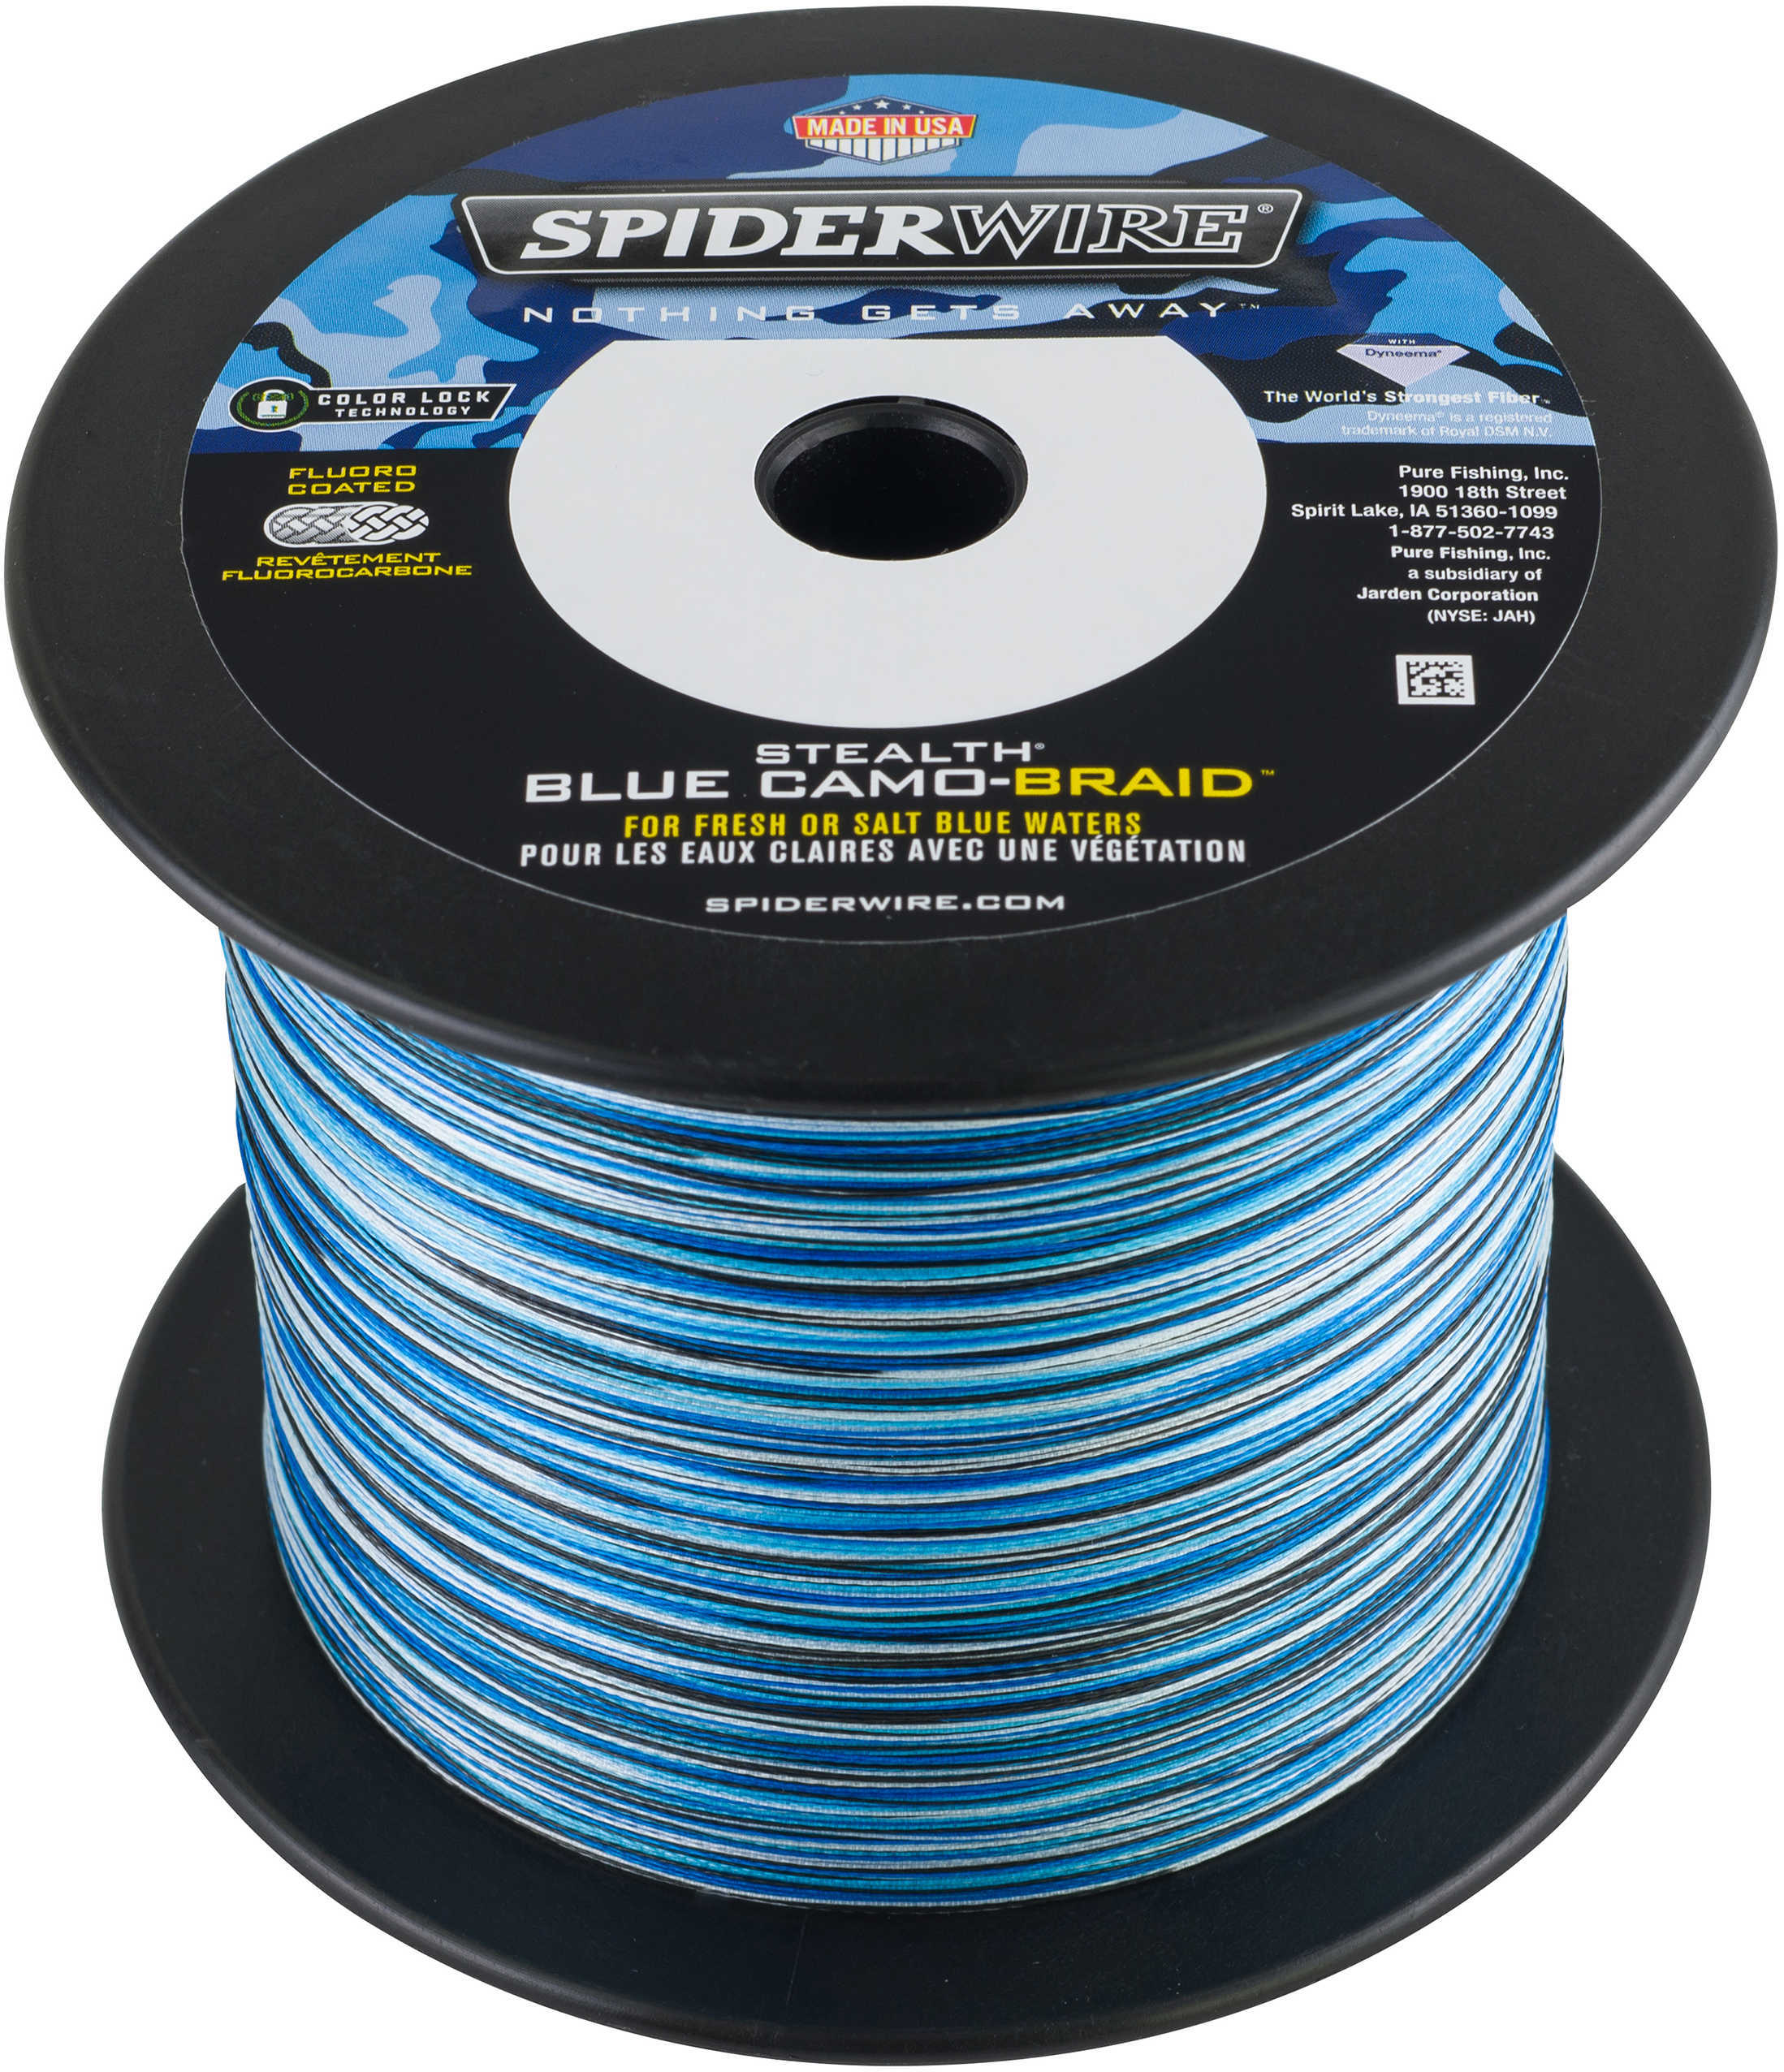 Spiderwire Stealth Braid 3000 Yards , 80 Lbs Strength, 0.016" Diameter, Blue Camo Md: 1370469